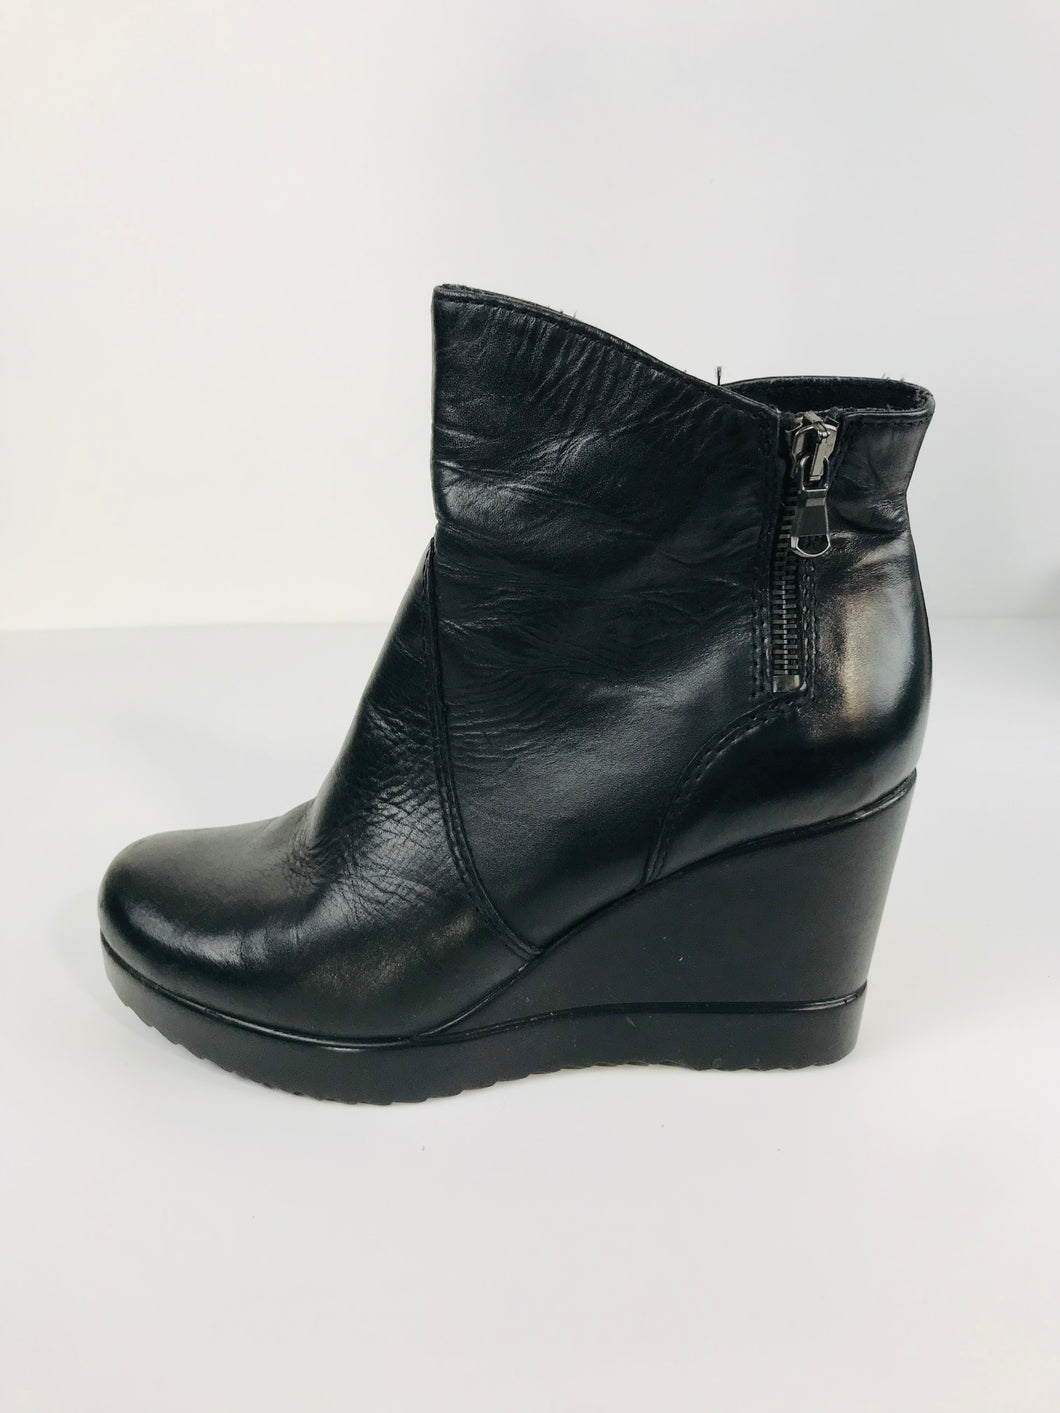 Tamaris Women's Wedge Ankle Boots | 38 UK5 | Black